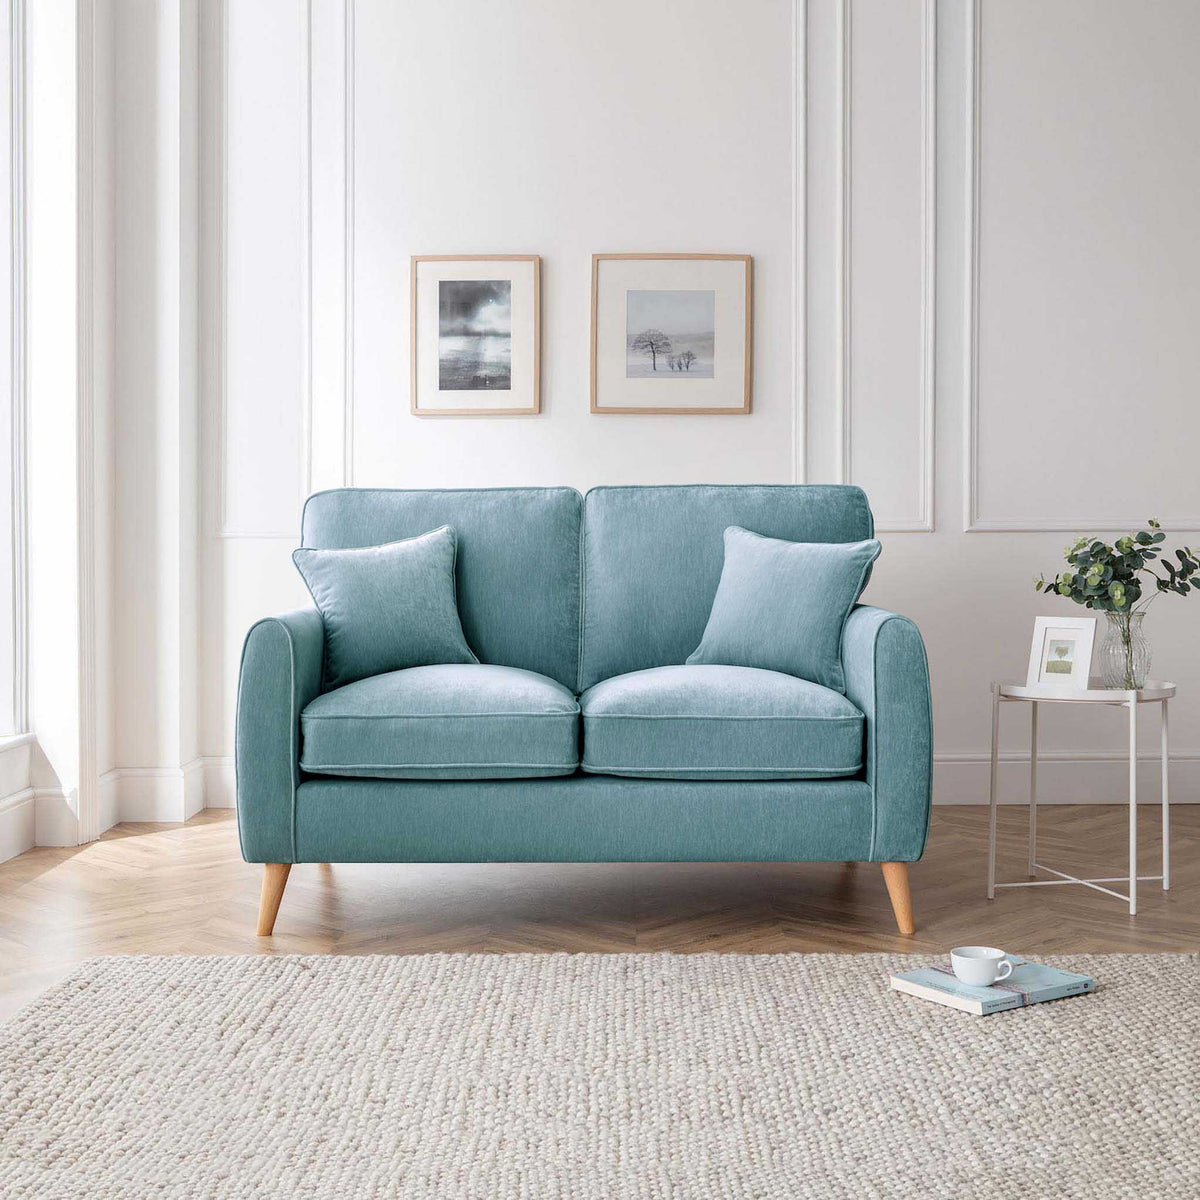 Ada Lagoon Blue 2 Seater Sofa from Roseland Furniture